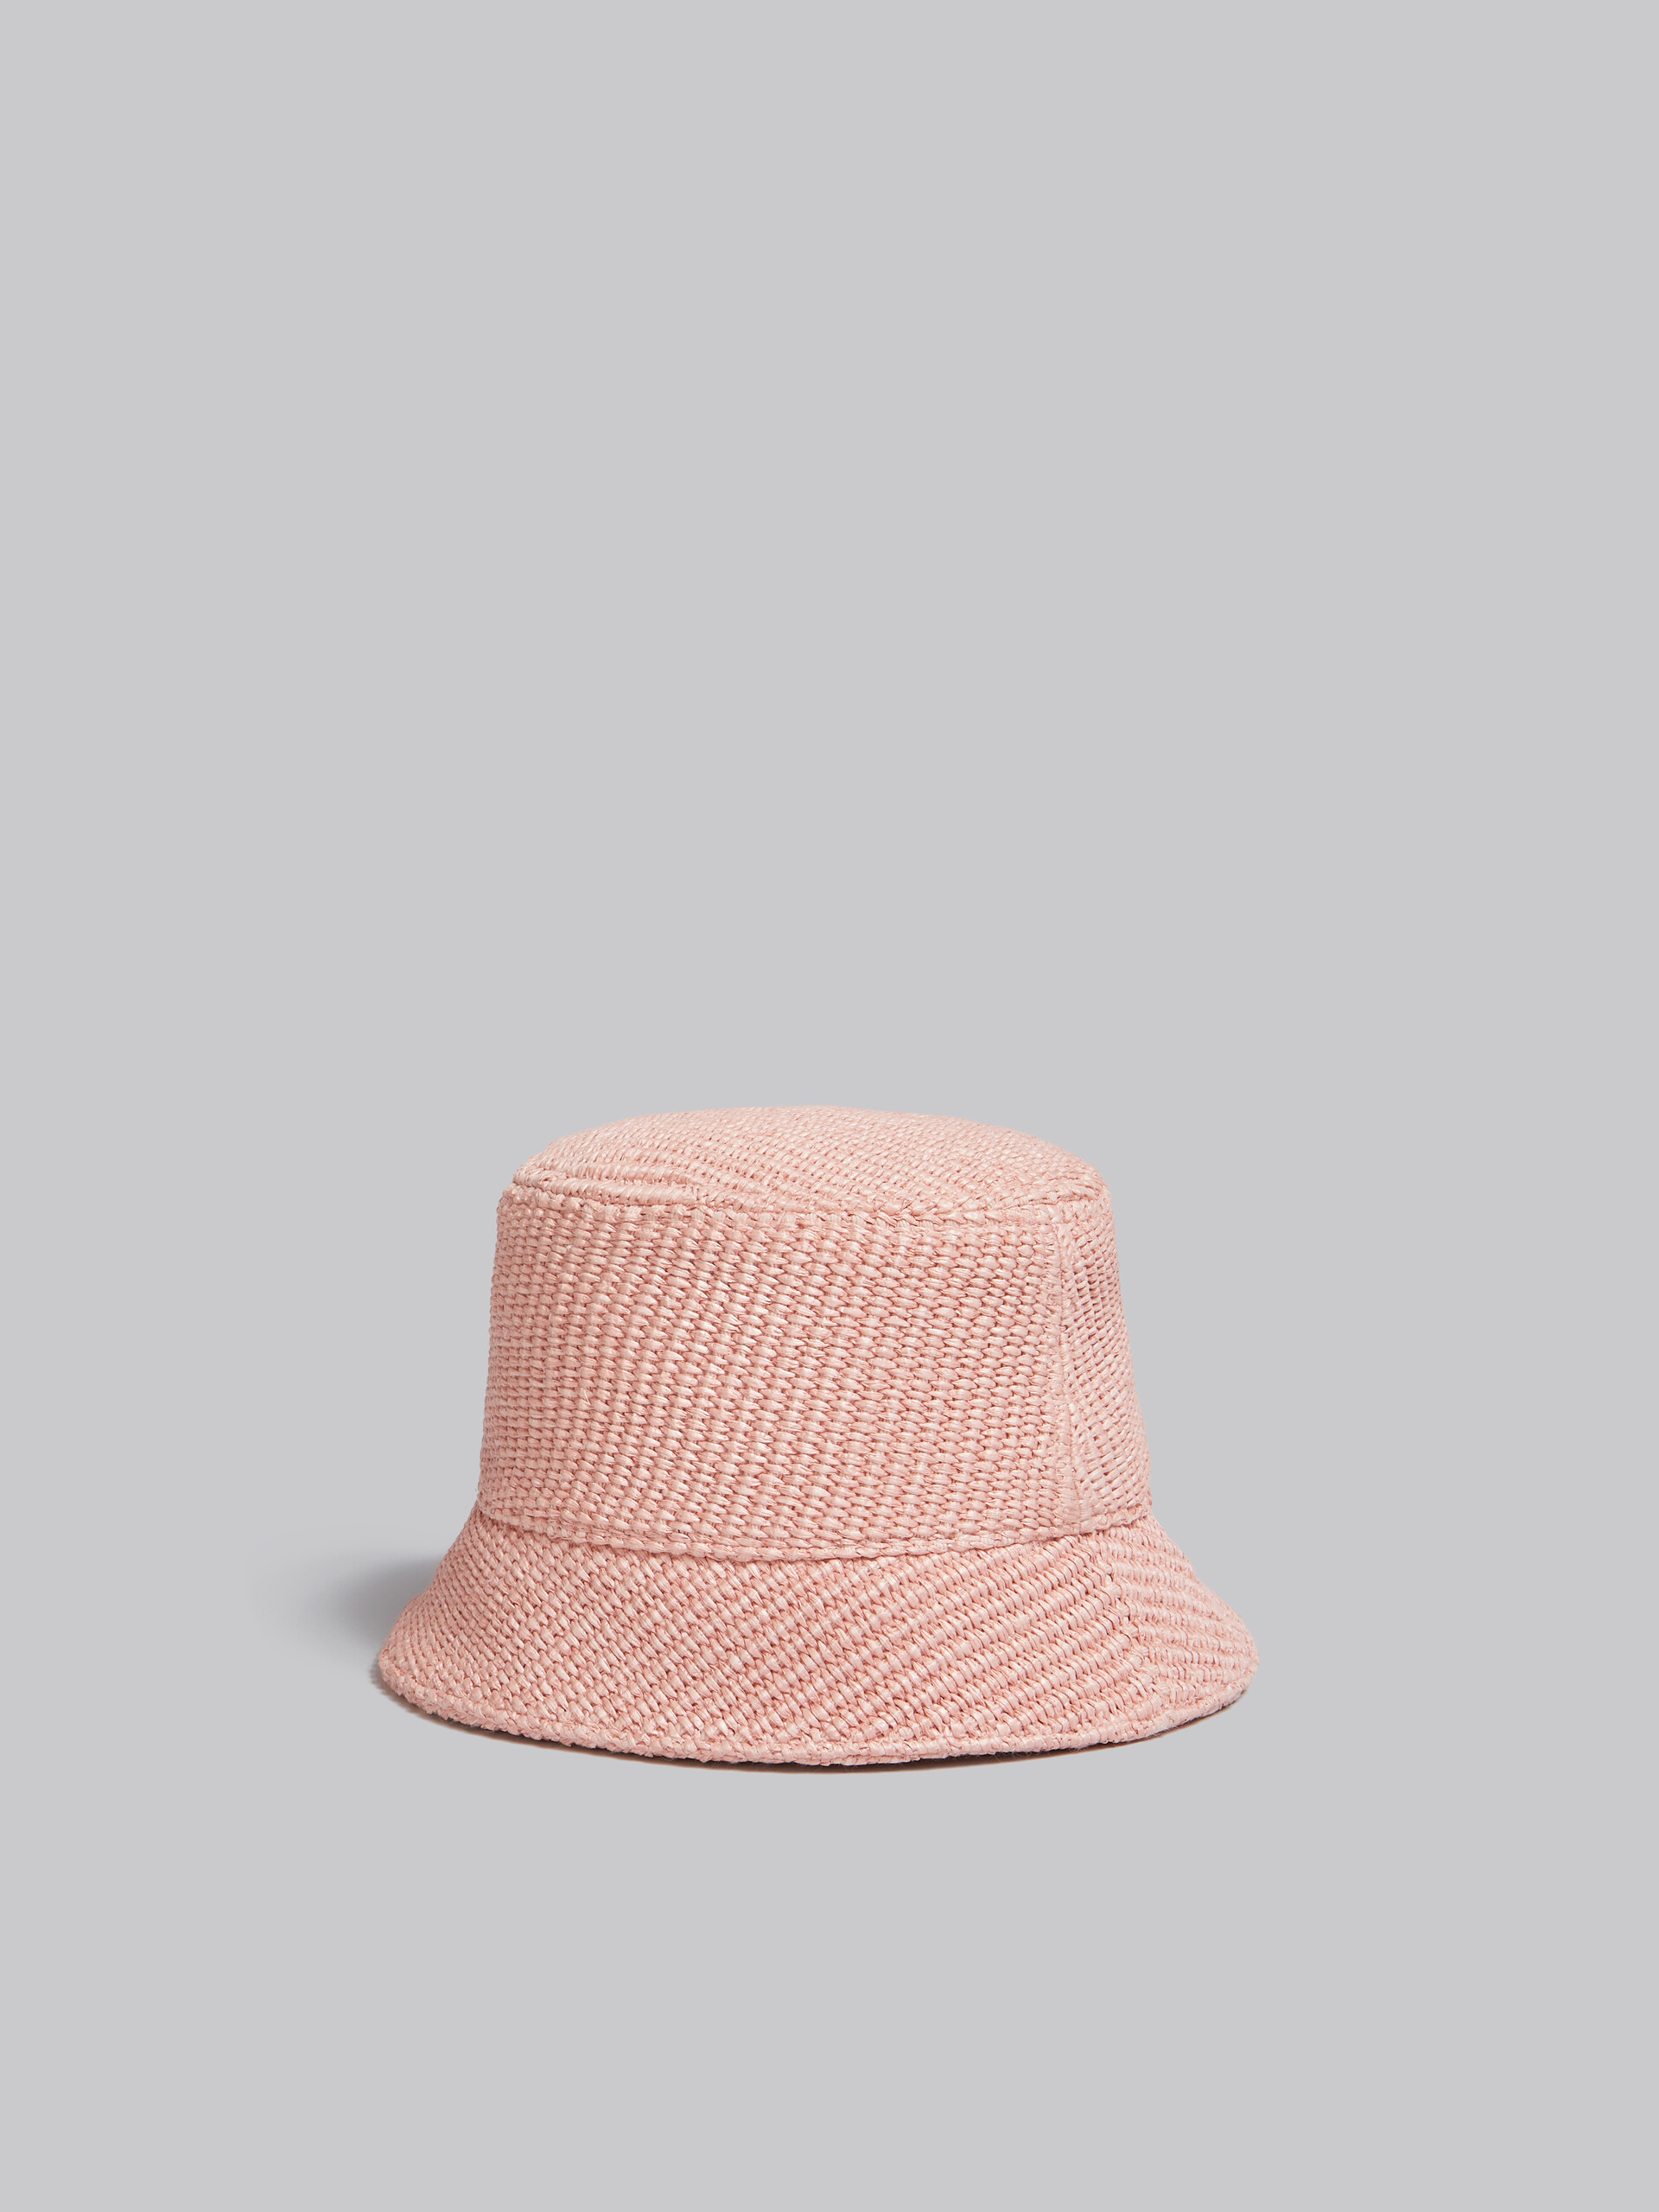 Gorro de pescador rosa de rafia con logotipo bordado - Sombrero - Image 3